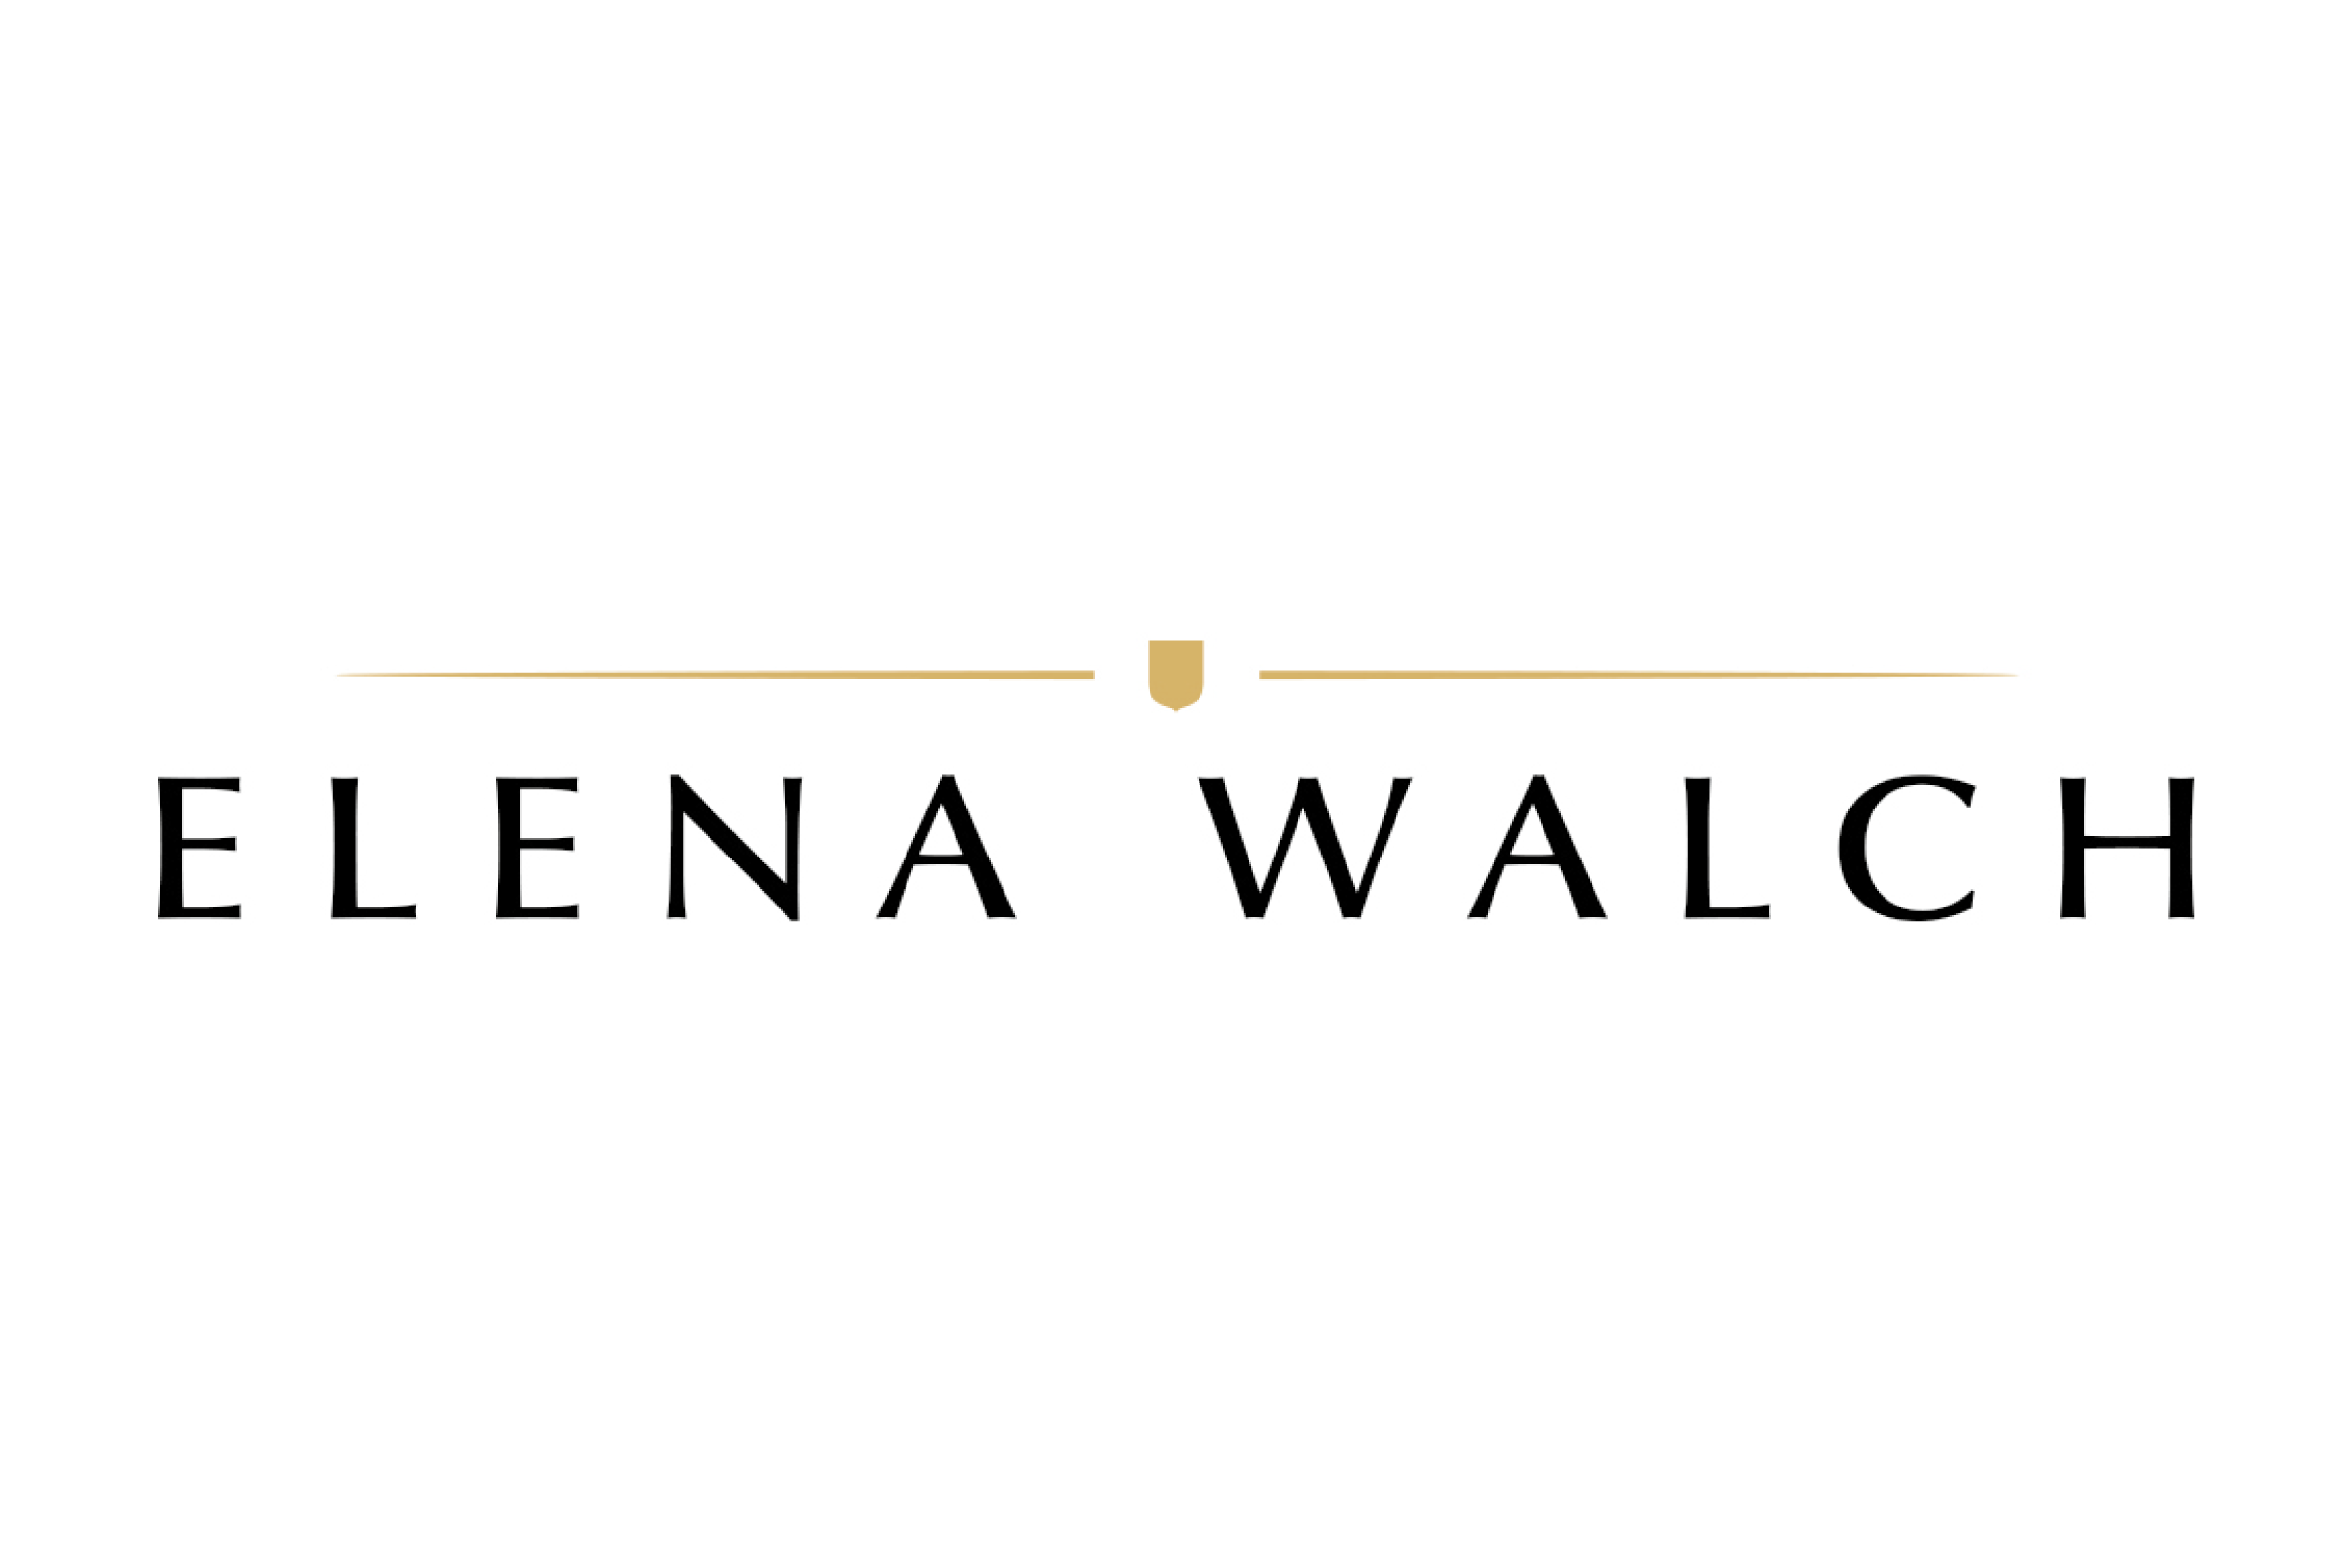 elena walch-01.png